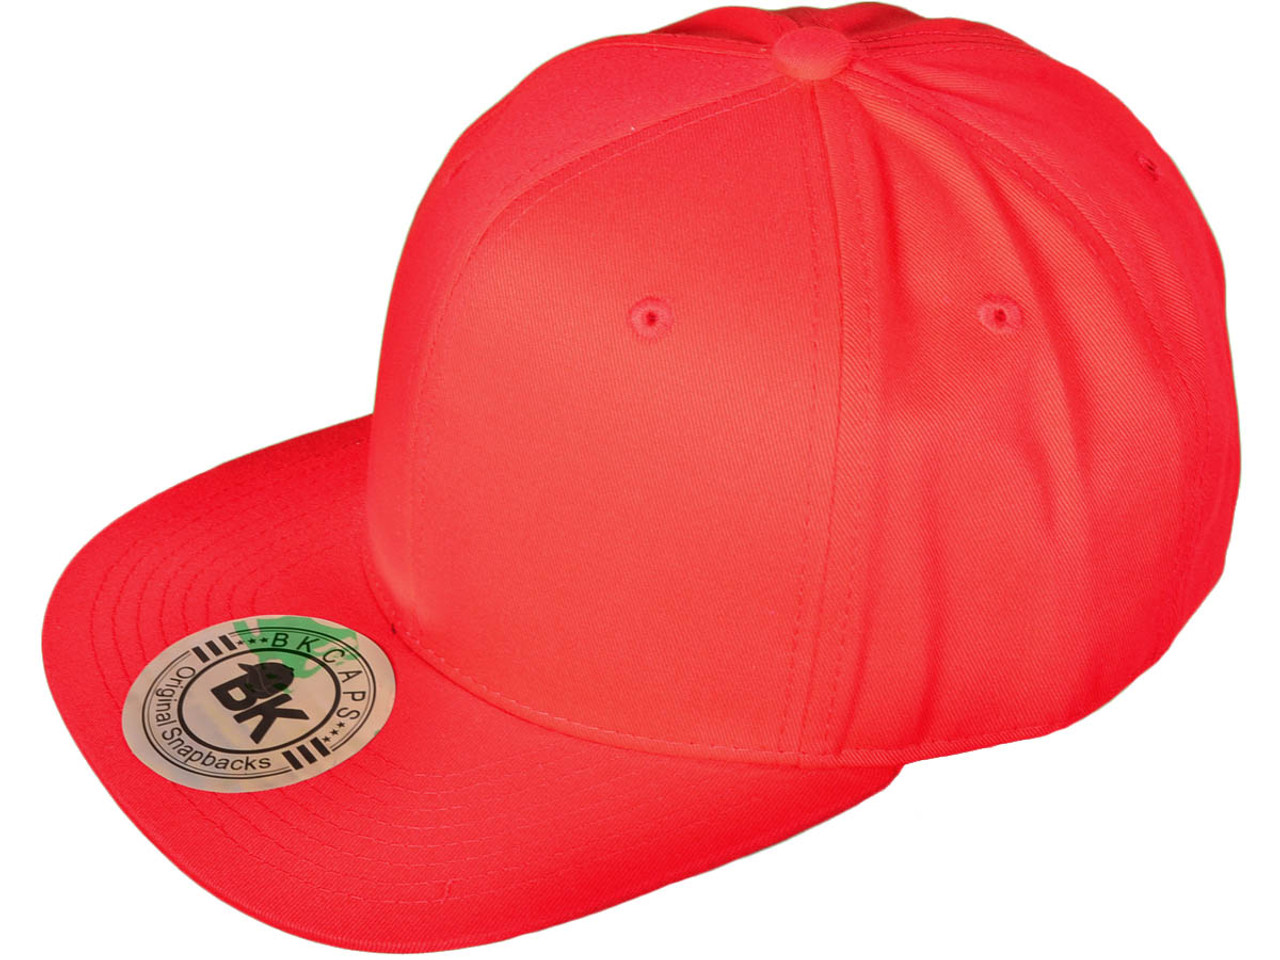 Black Fitted Flat Bill Plain Solid Blank Baseball Ball Cap Caps Hat Hats 9  SIZES